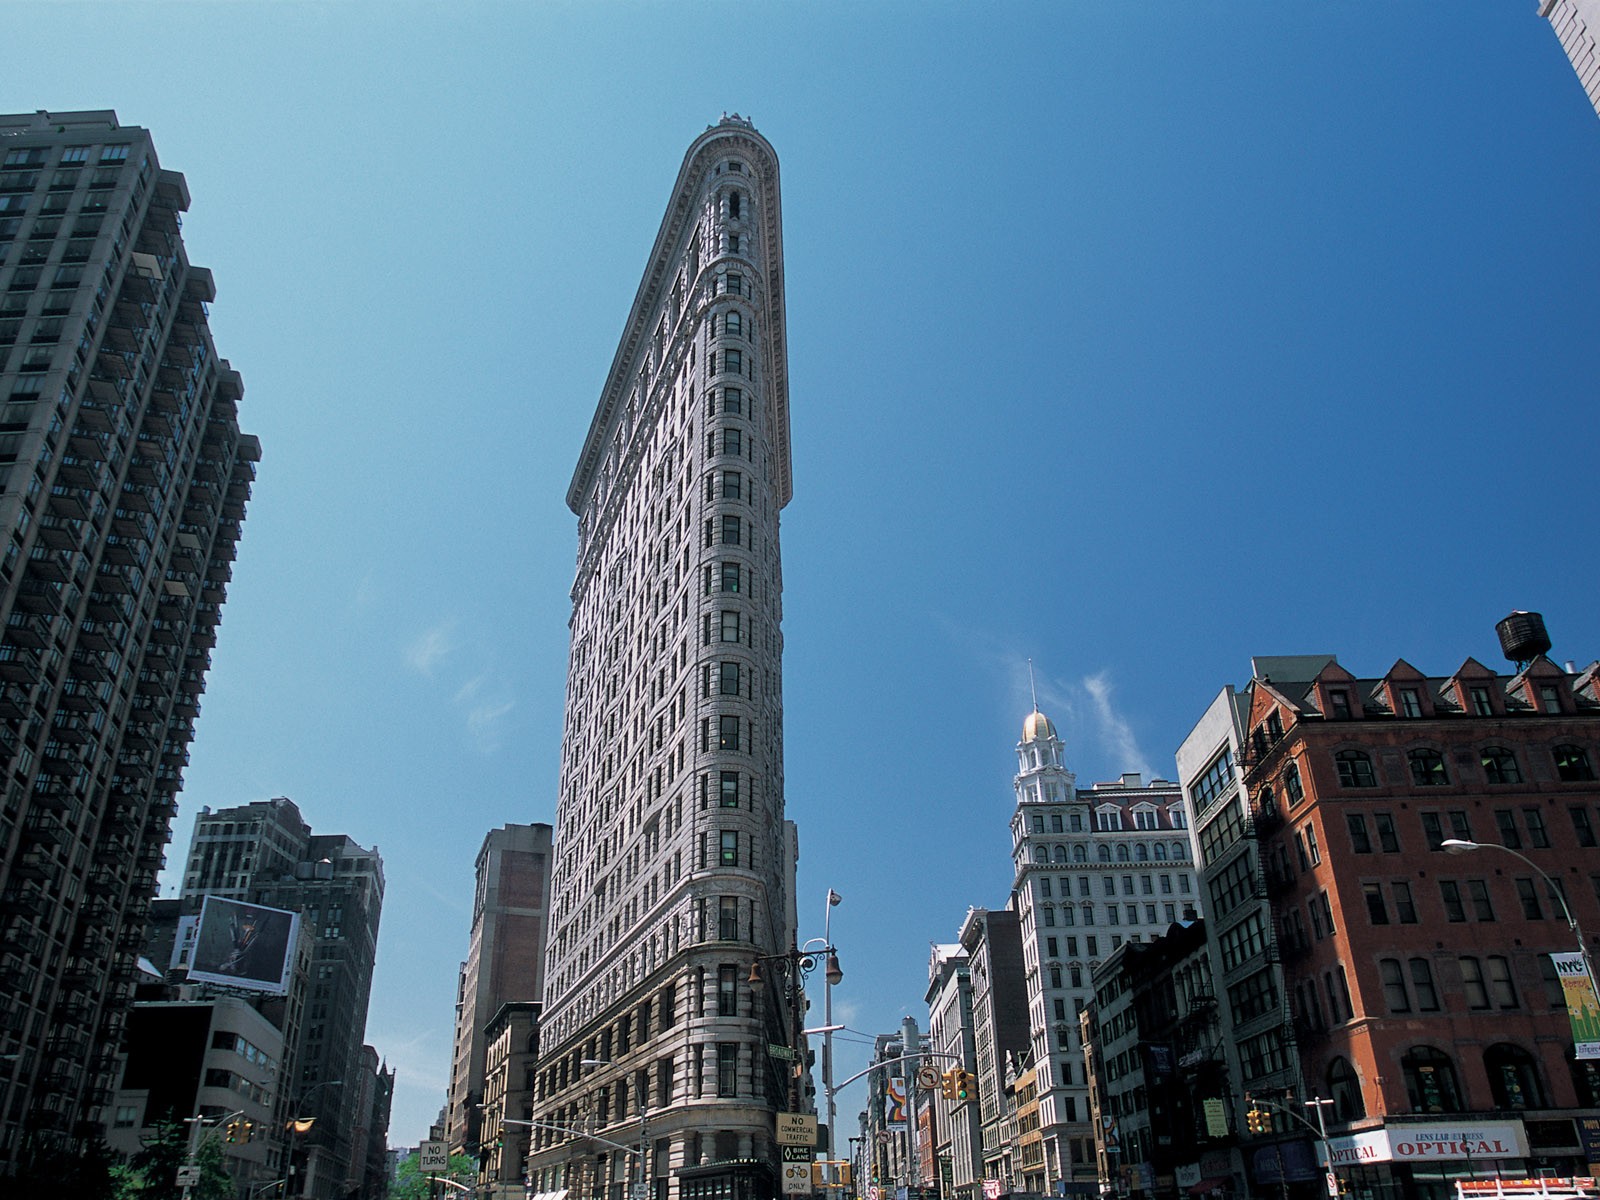 Quirligen Stadt New York Building #8 - 1600x1200